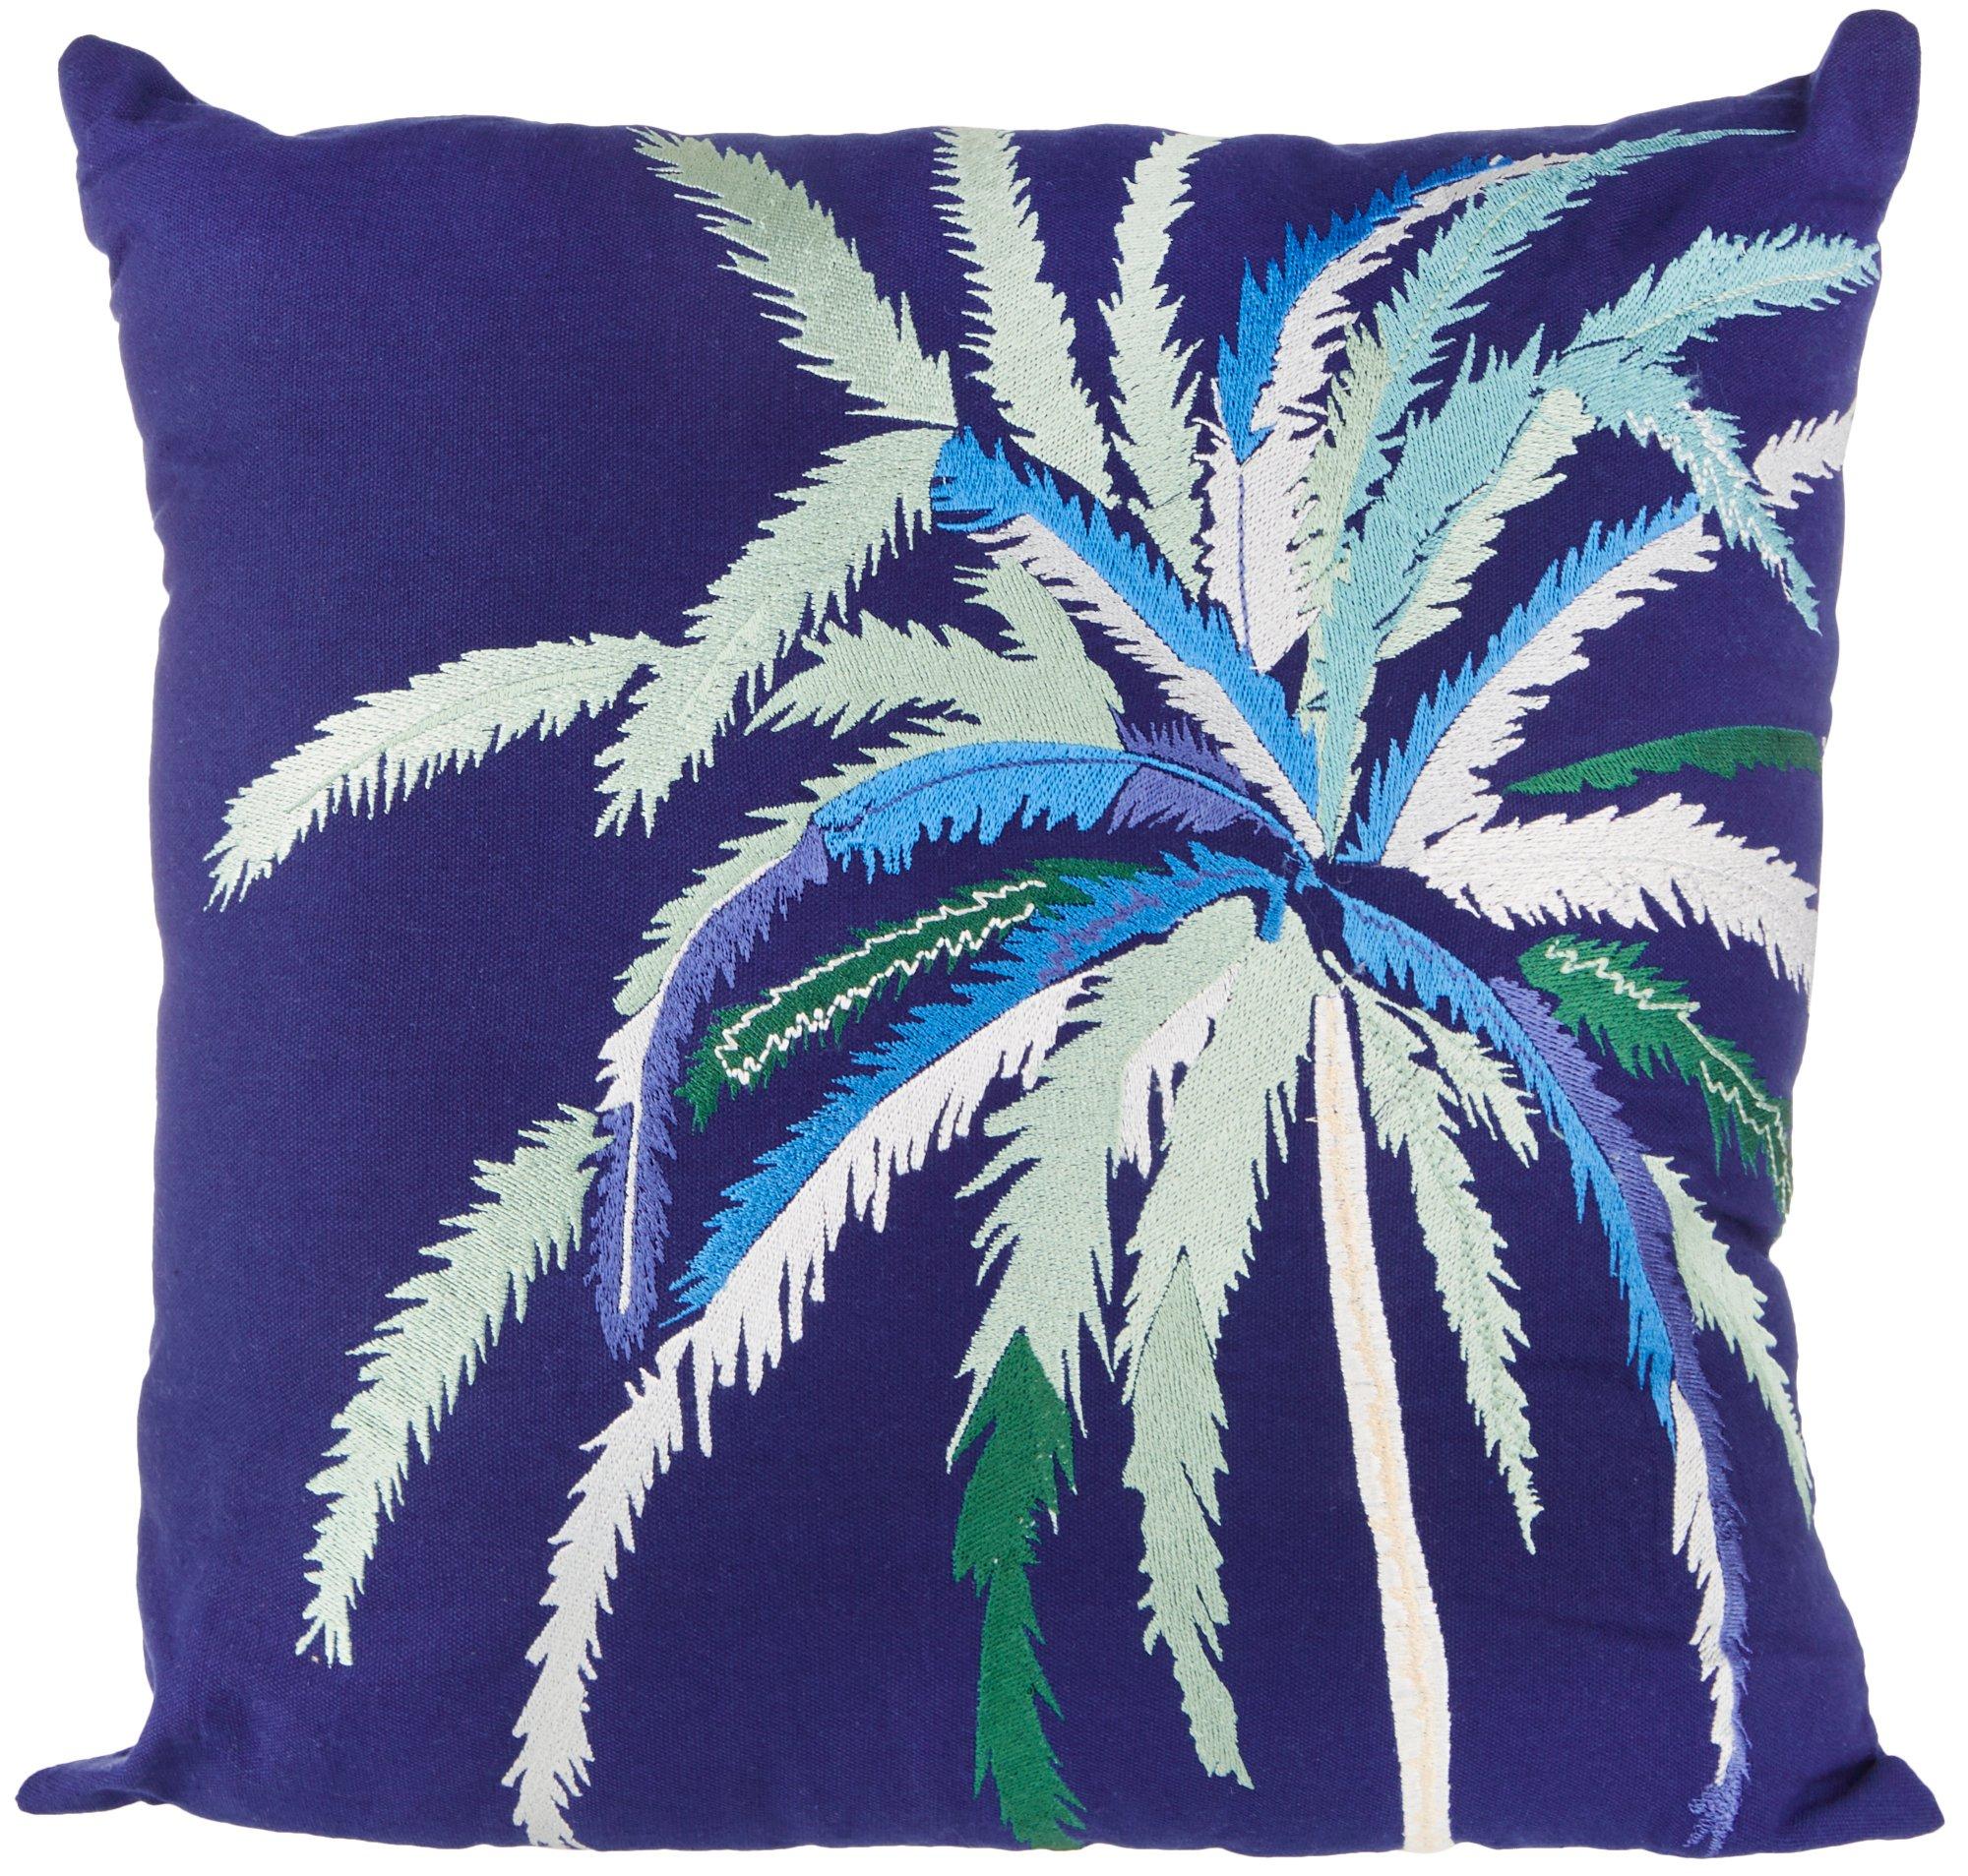 Coastal Home 16x16 Palm Pillow